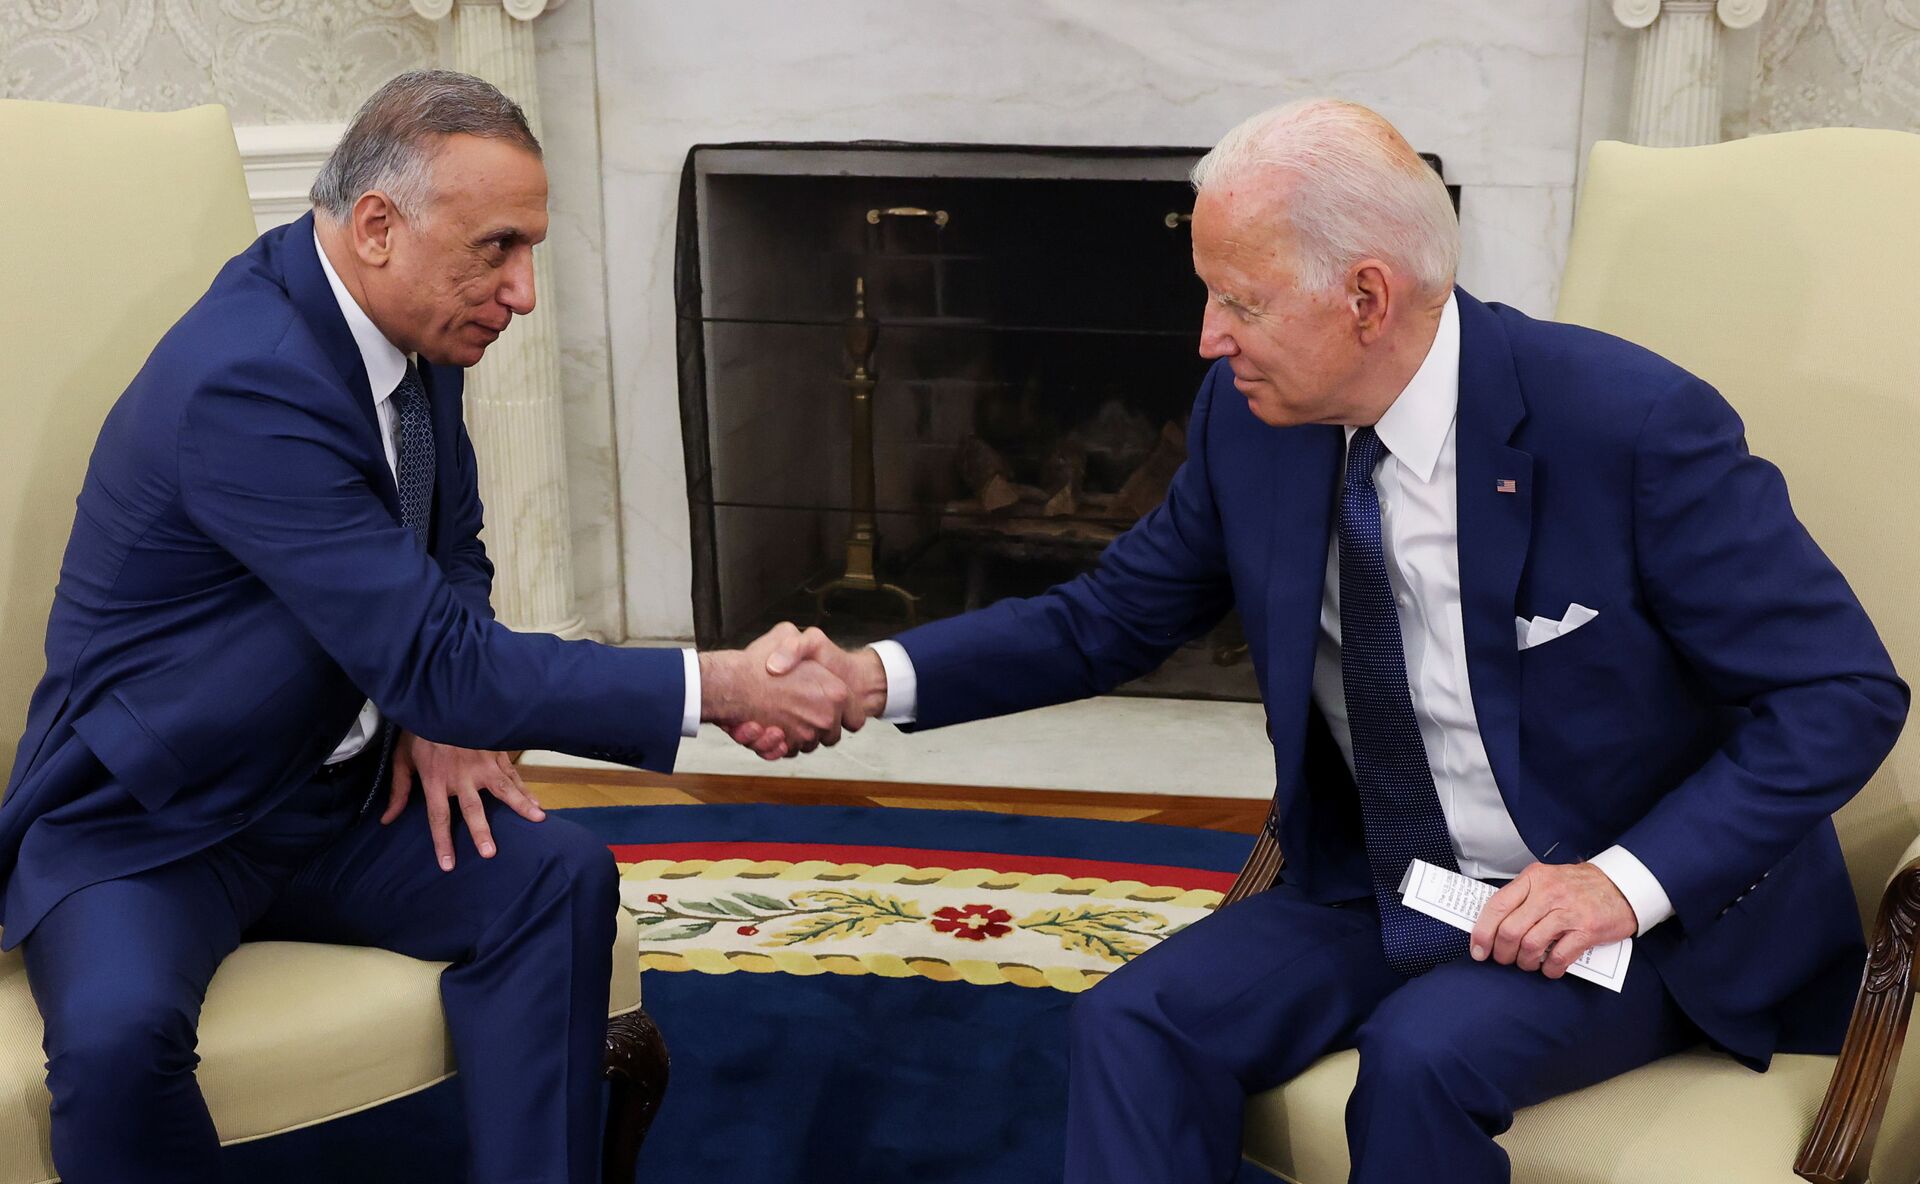 Presidente americano Joe Biden cumprimenta premiê iraquiano Mustafa Al-Kadhimi durante encontro bilateral na Casa Branca, Washington, EUA, 26 de julho de 2021 - Sputnik Brasil, 1920, 23.12.2021